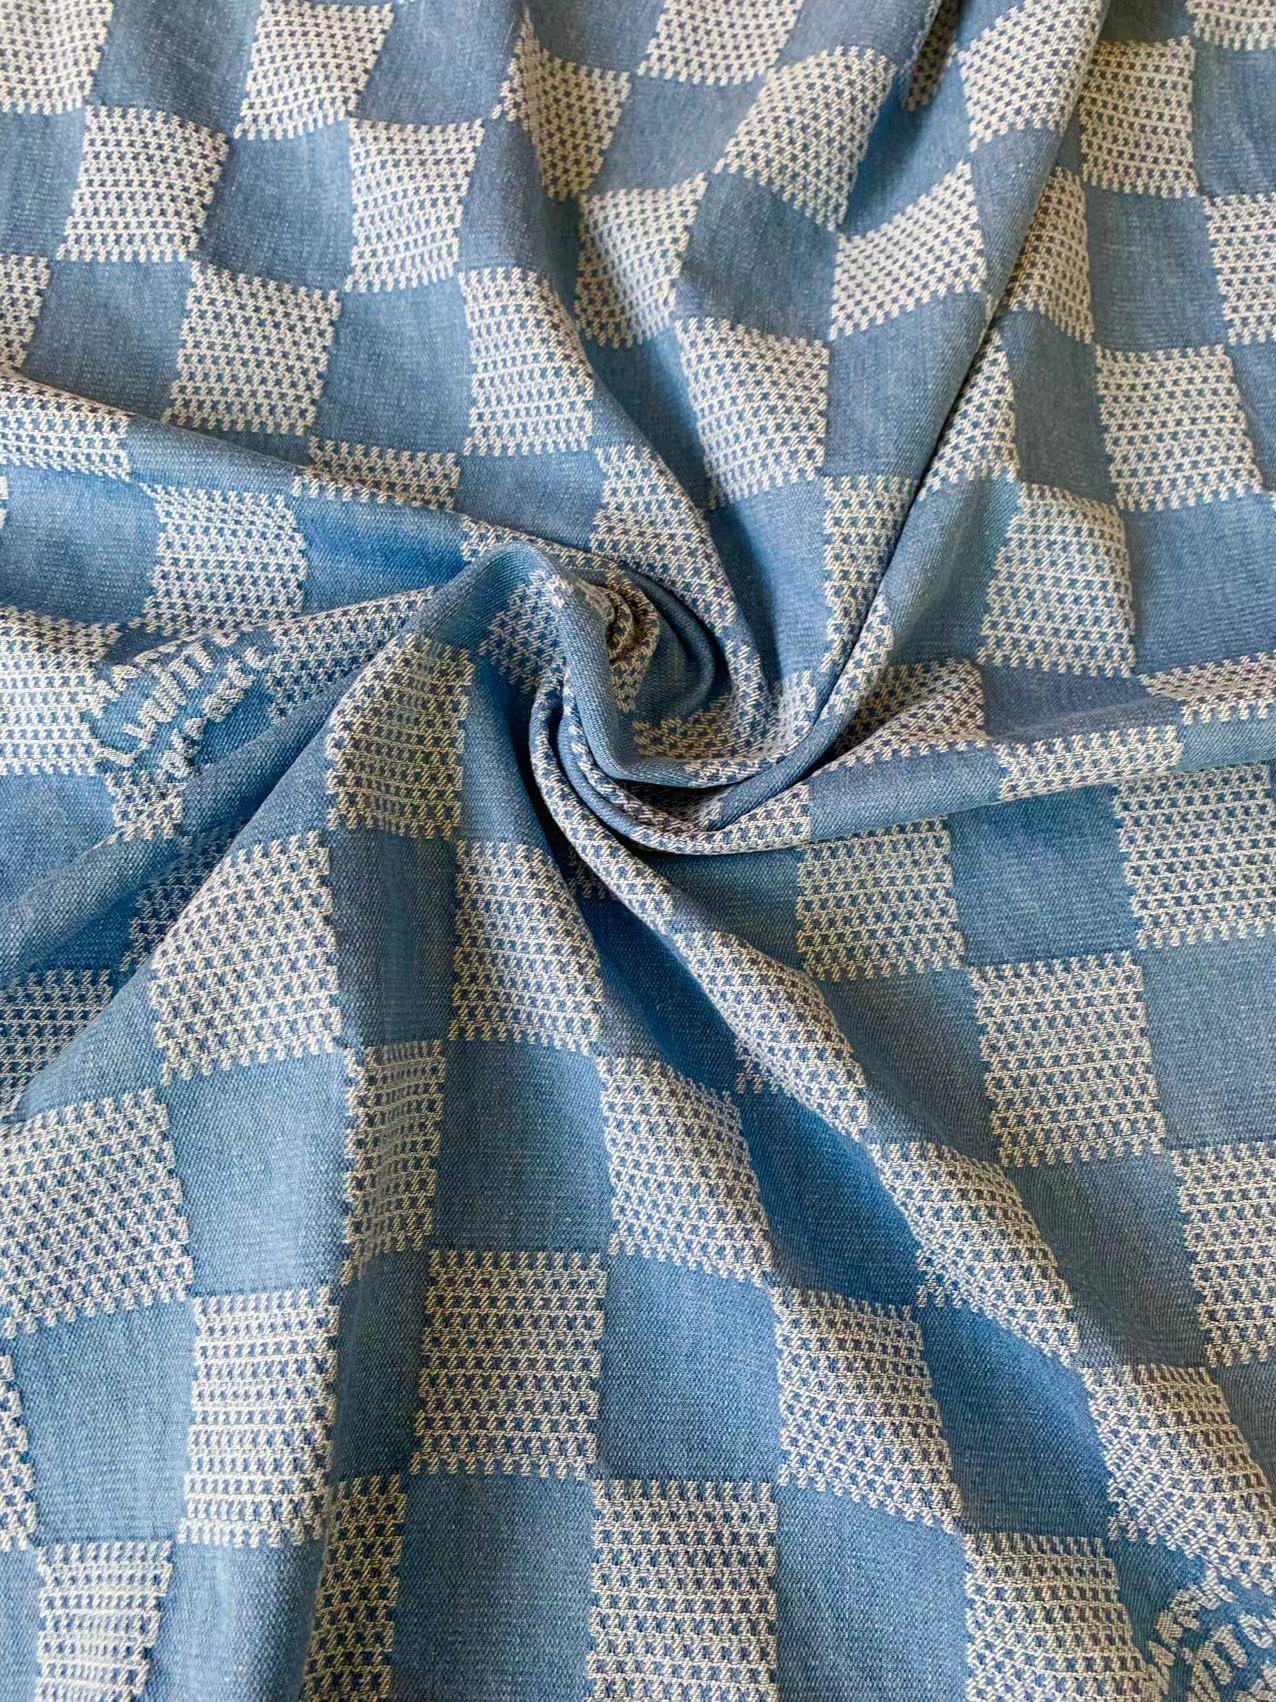 Craft Wash LV Damier Jacquard Denim Jean Fabric For Handmade Sewing DIY Upholstery ,Apparel  By Yard